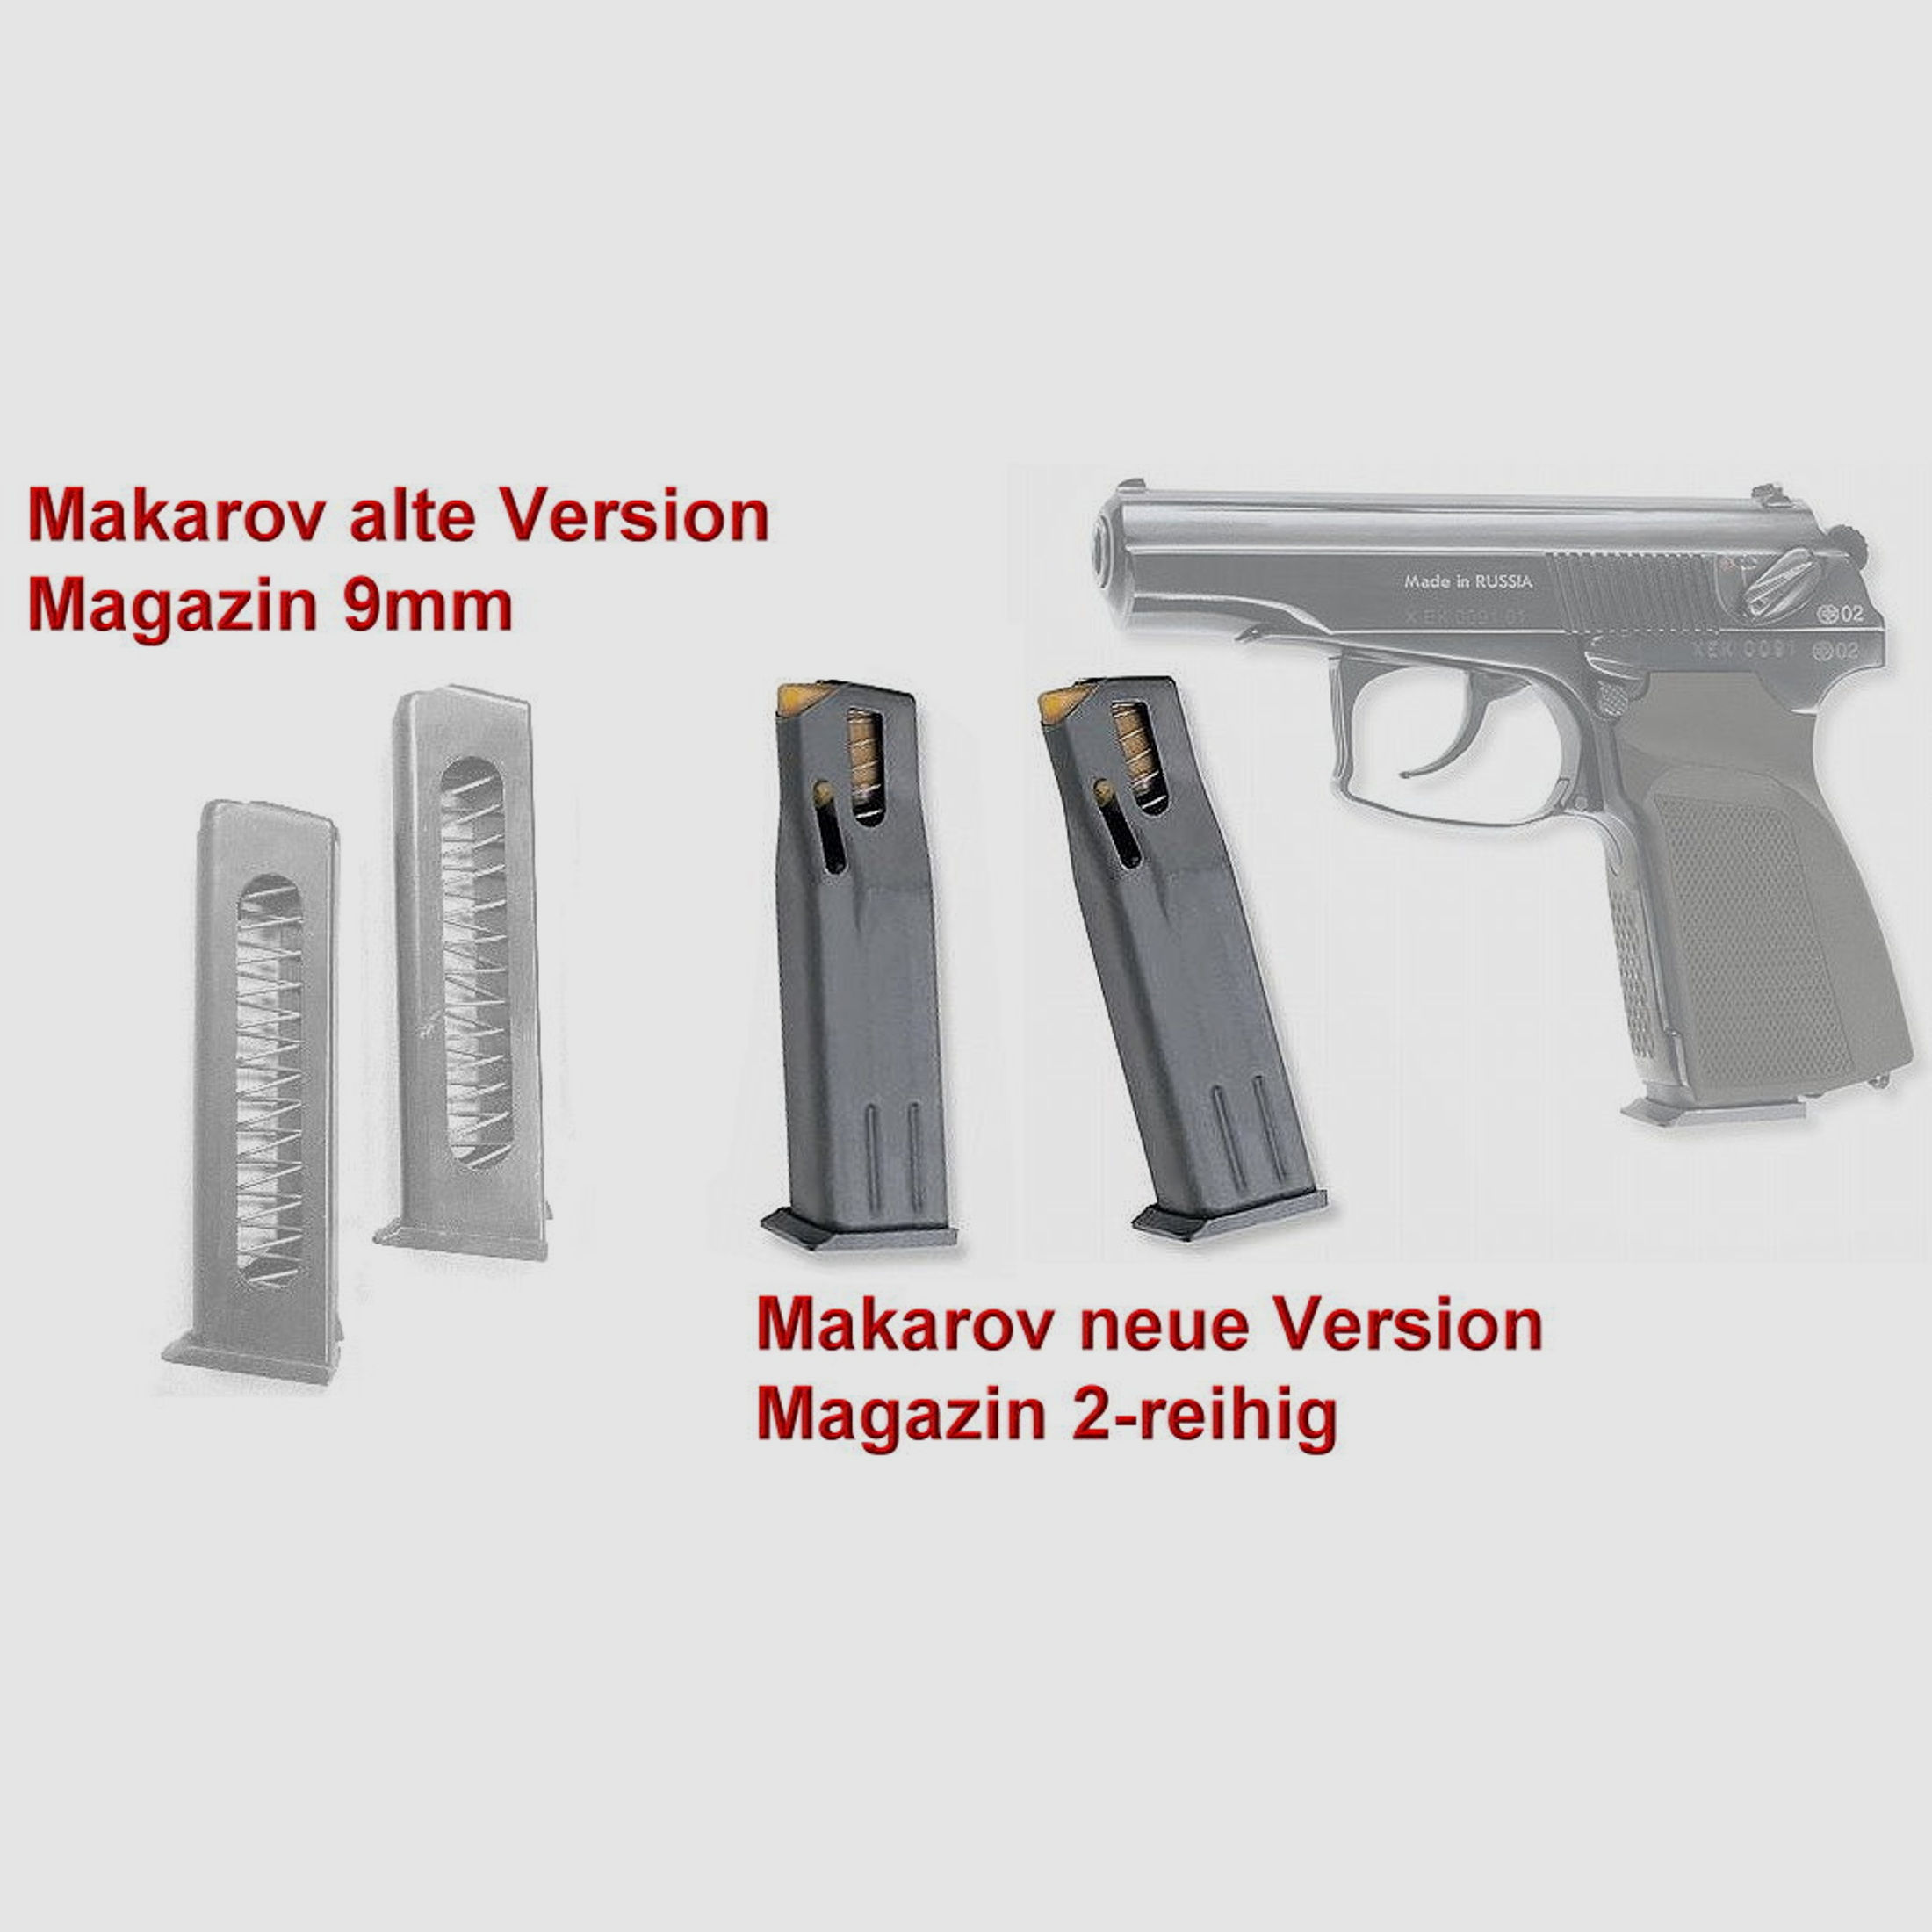 Magazin für Makarov 9mm PMM Baikal 9mm PMM